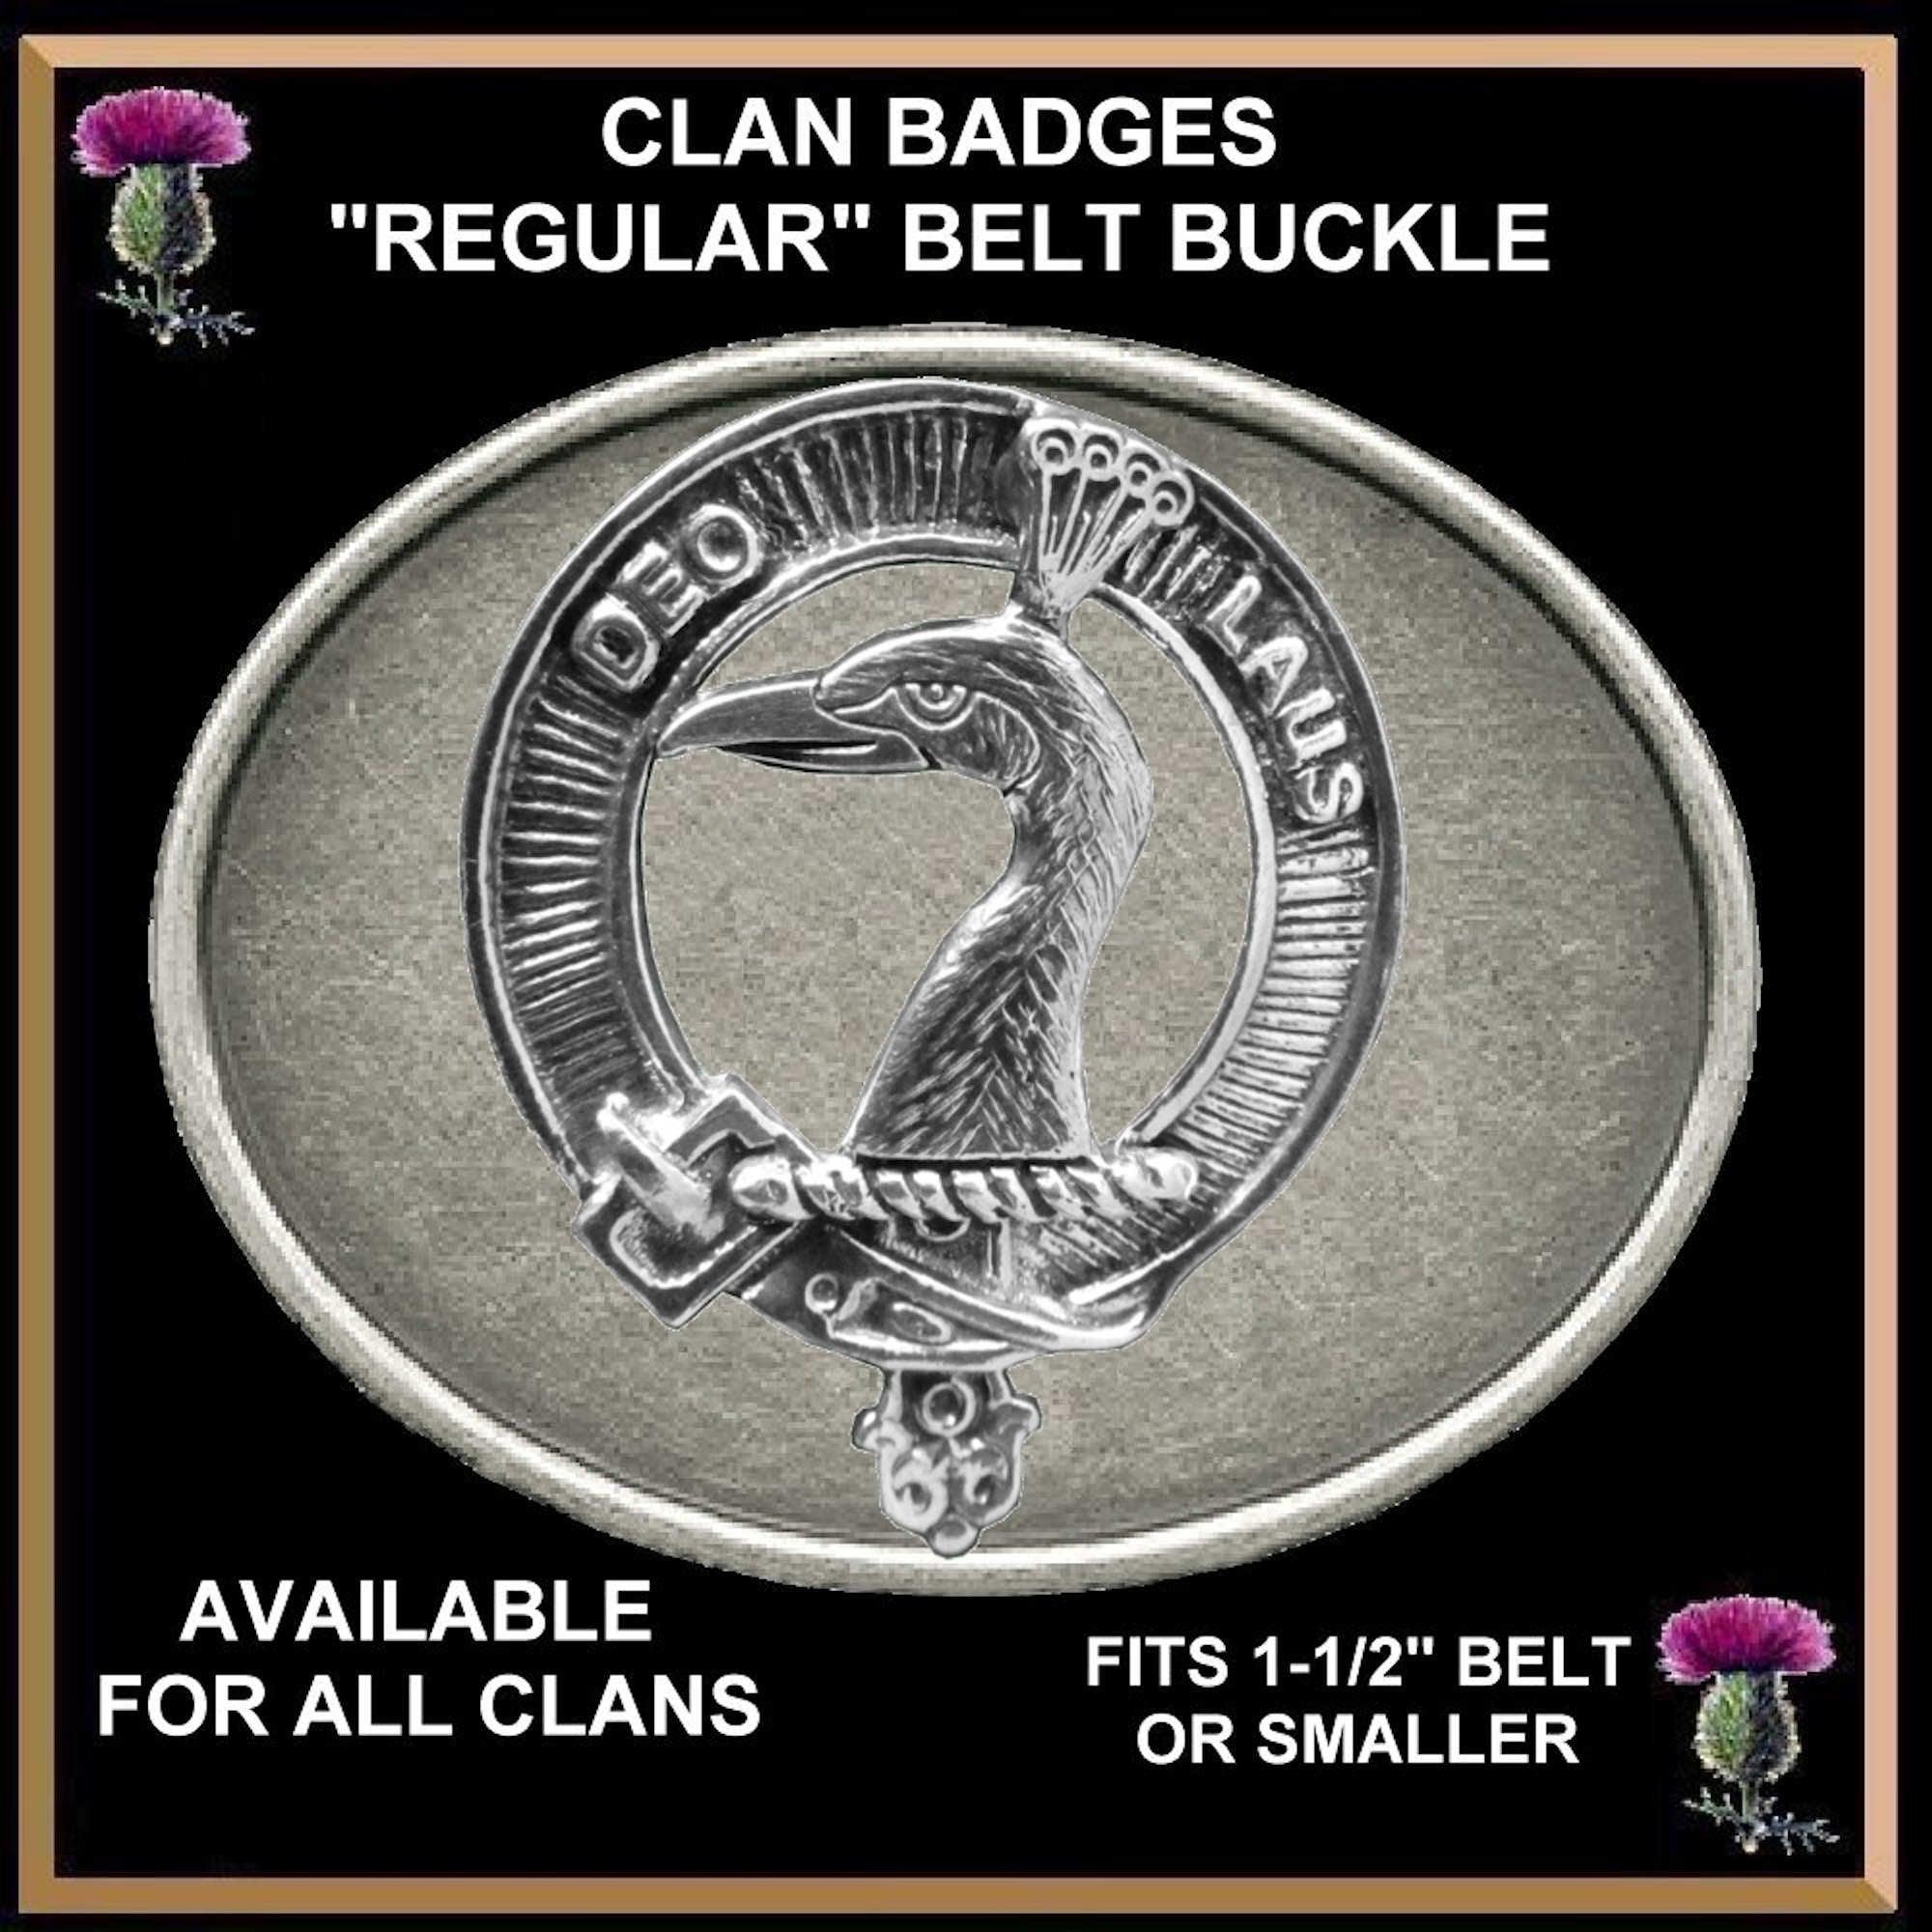 Arbuthnott Clan Crest Regular Buckle